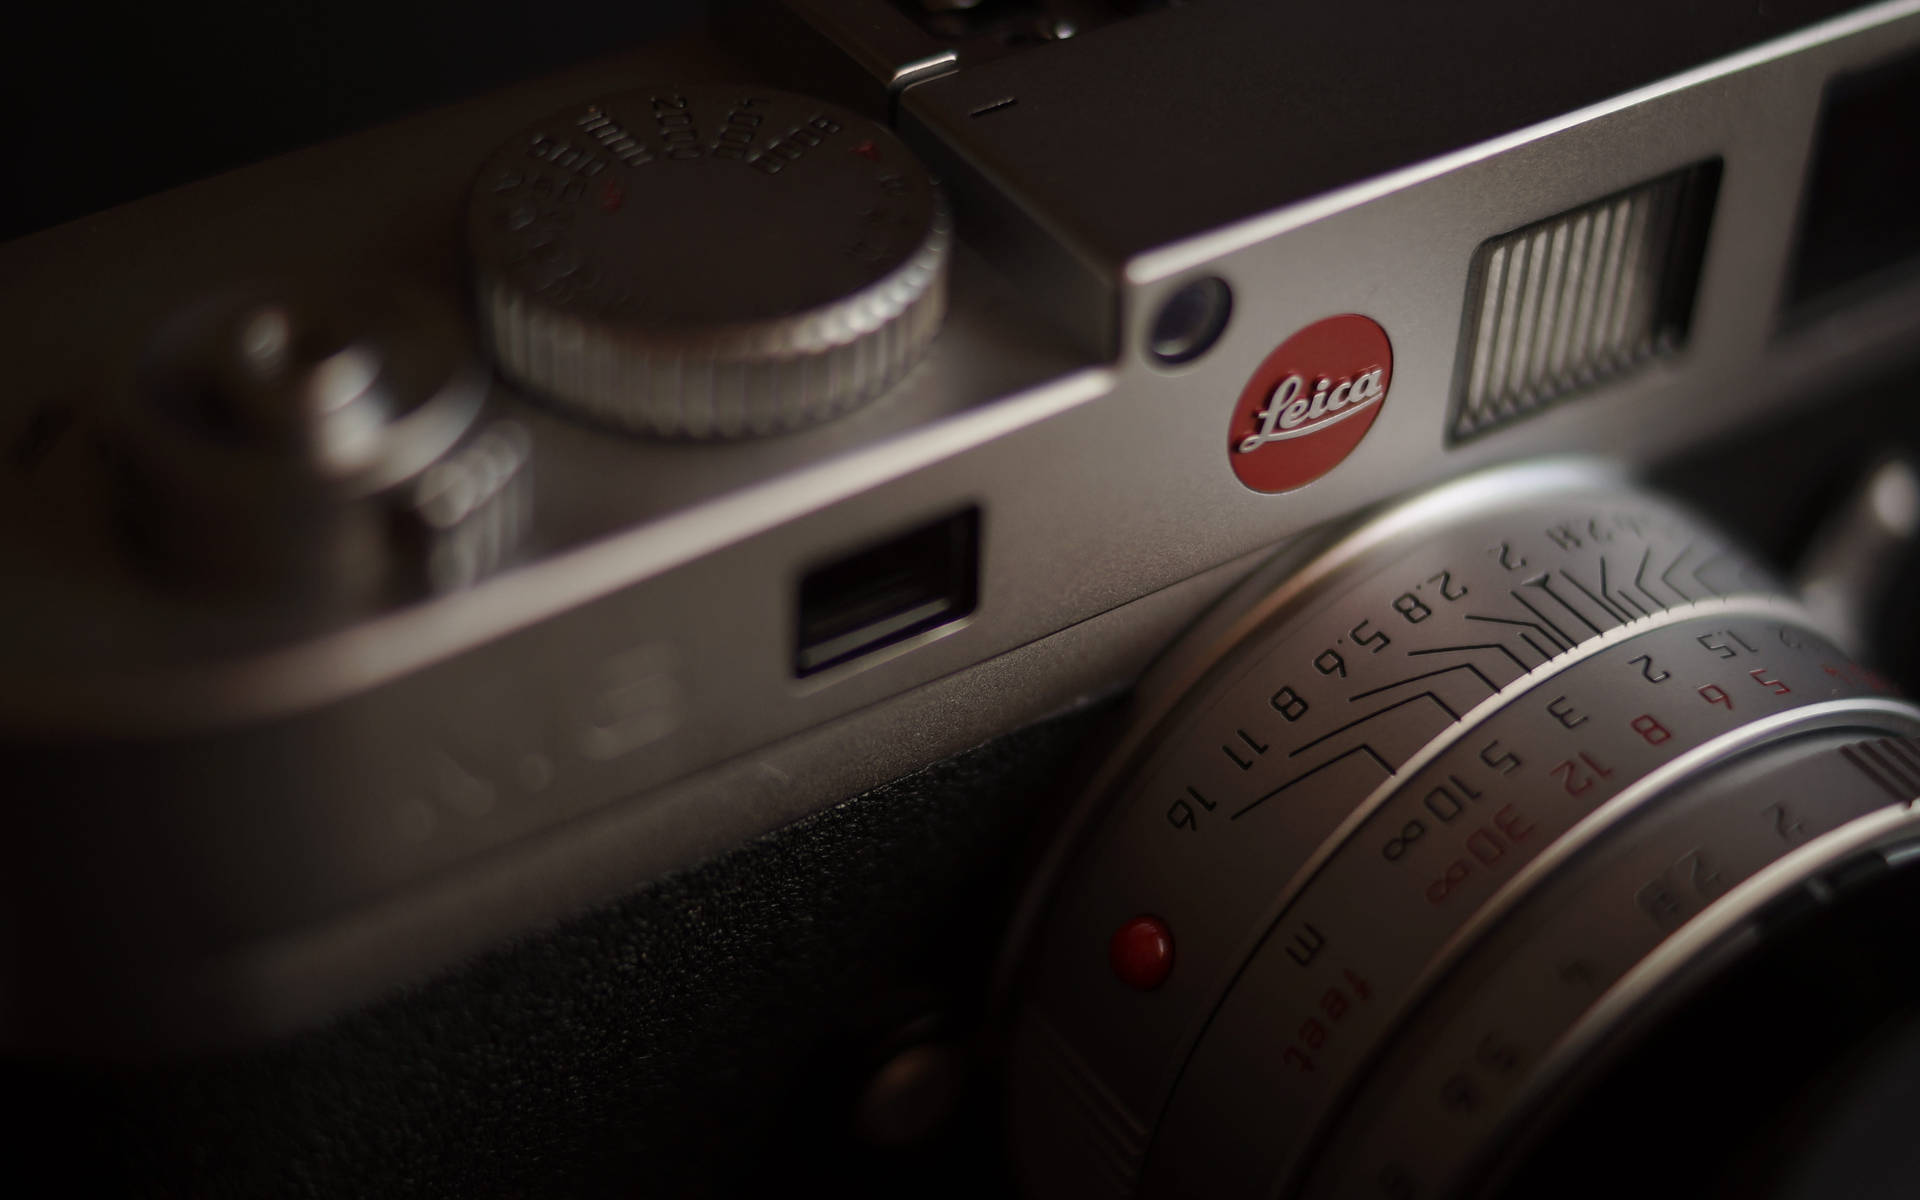 Leica Dslr Camera Close-up Wallpaper